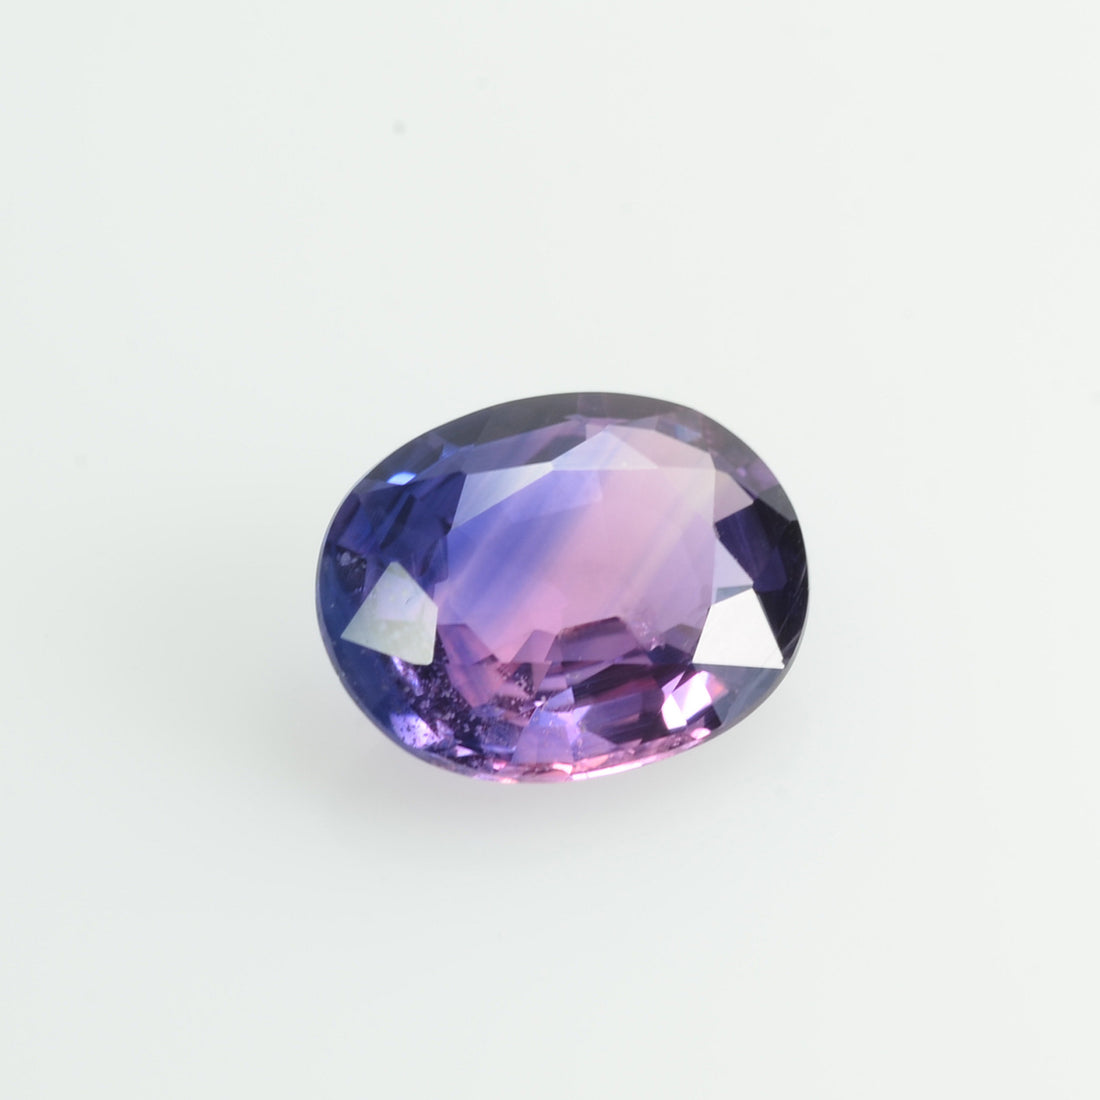 1.23 cts Natural Fancy Bi-Color Sapphire Loose Gemstone Oval Cut - Thai Gems Export Ltd.